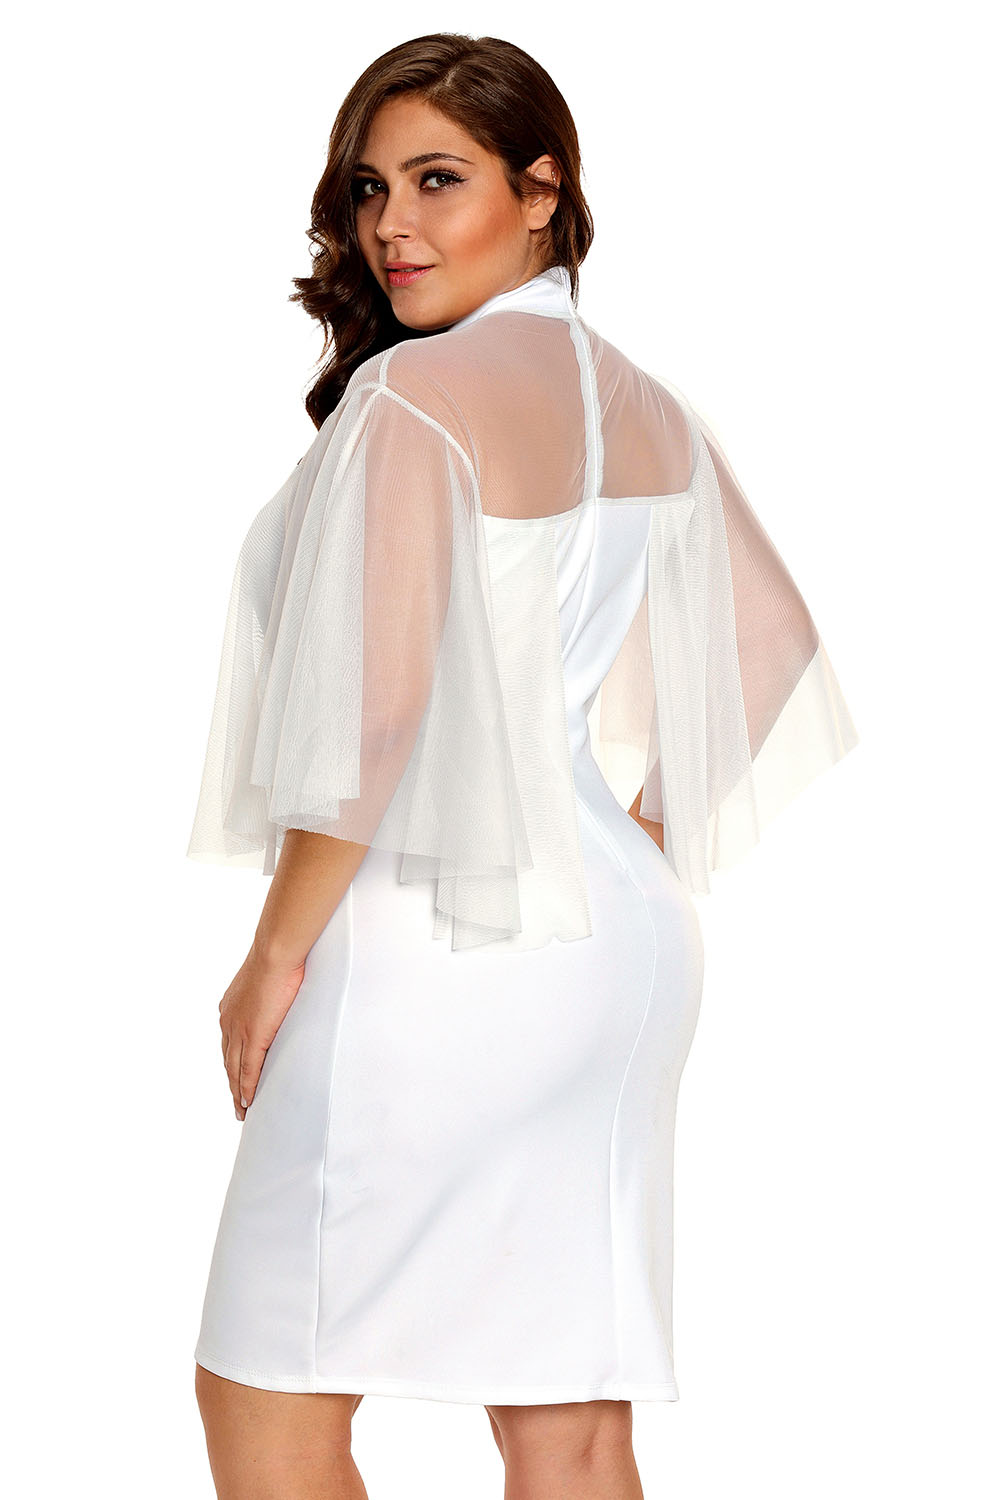 BY220153-1 White Plus Size Semi sheer Dress